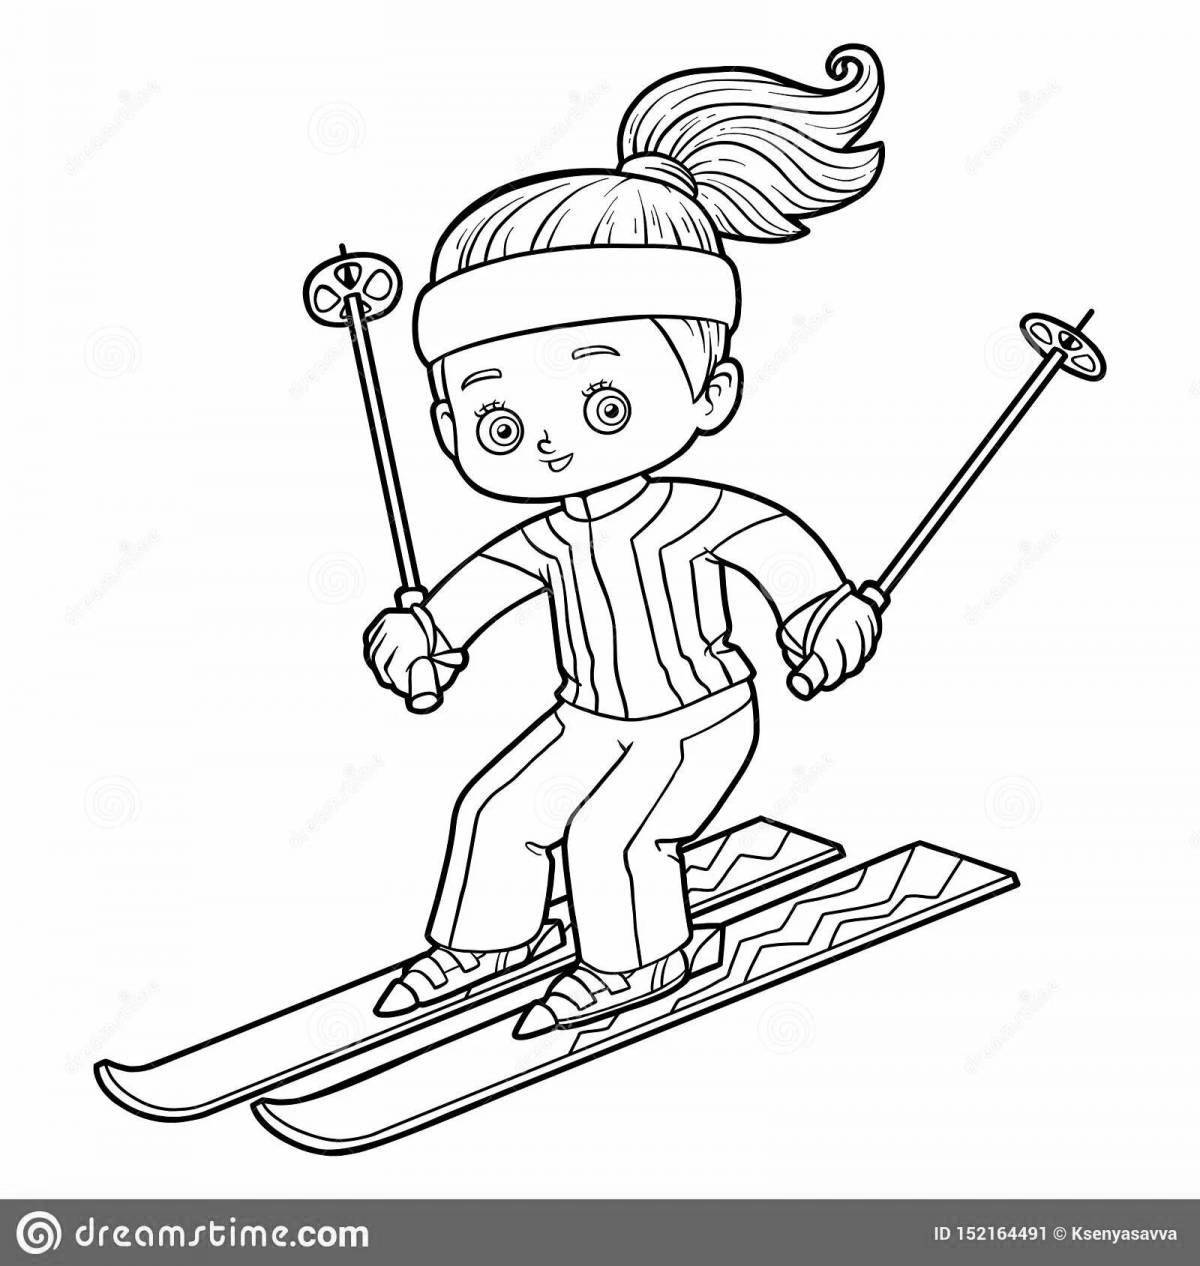 Светящаяся семейная раскраска на лыжах